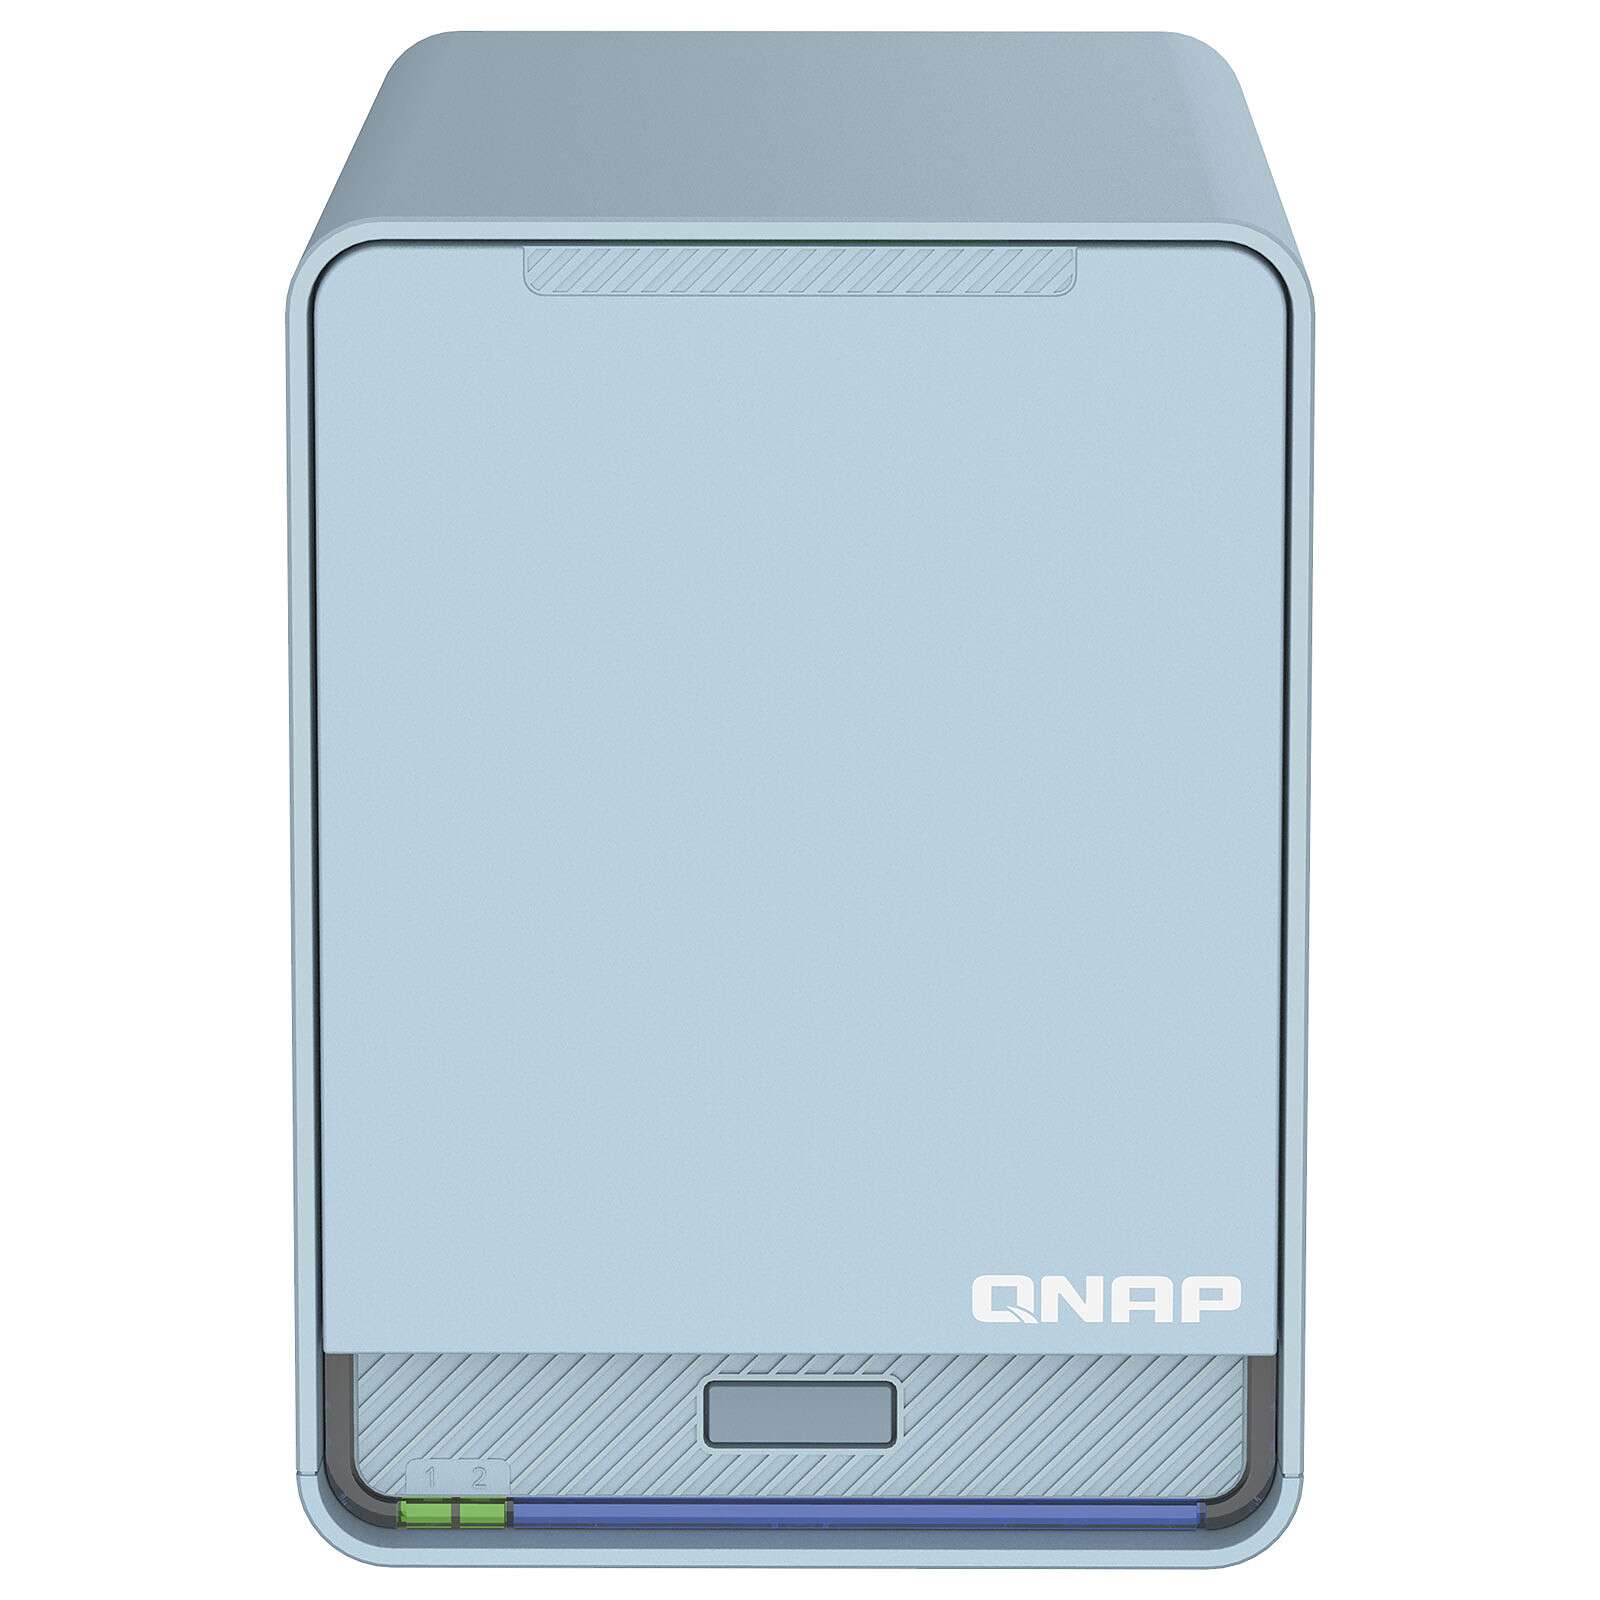 Qnap qmiroplus-201w tri-band gigabit router